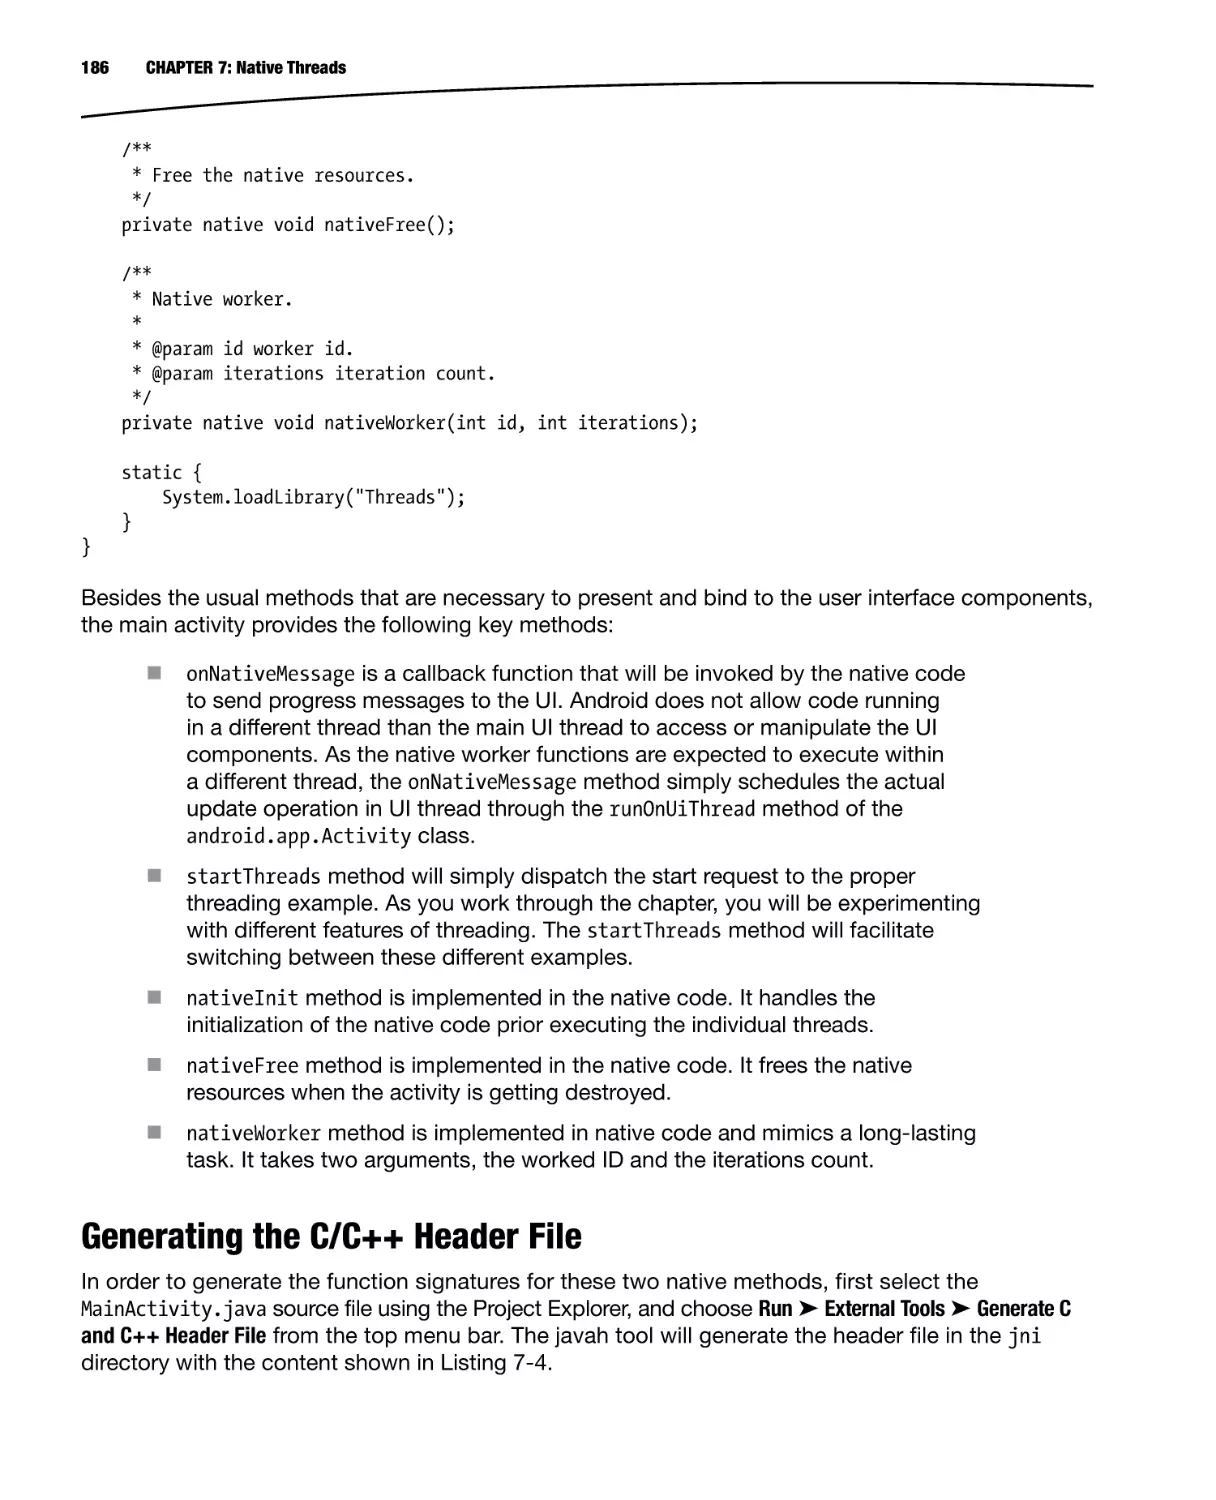 Generating the C/C++ Header File